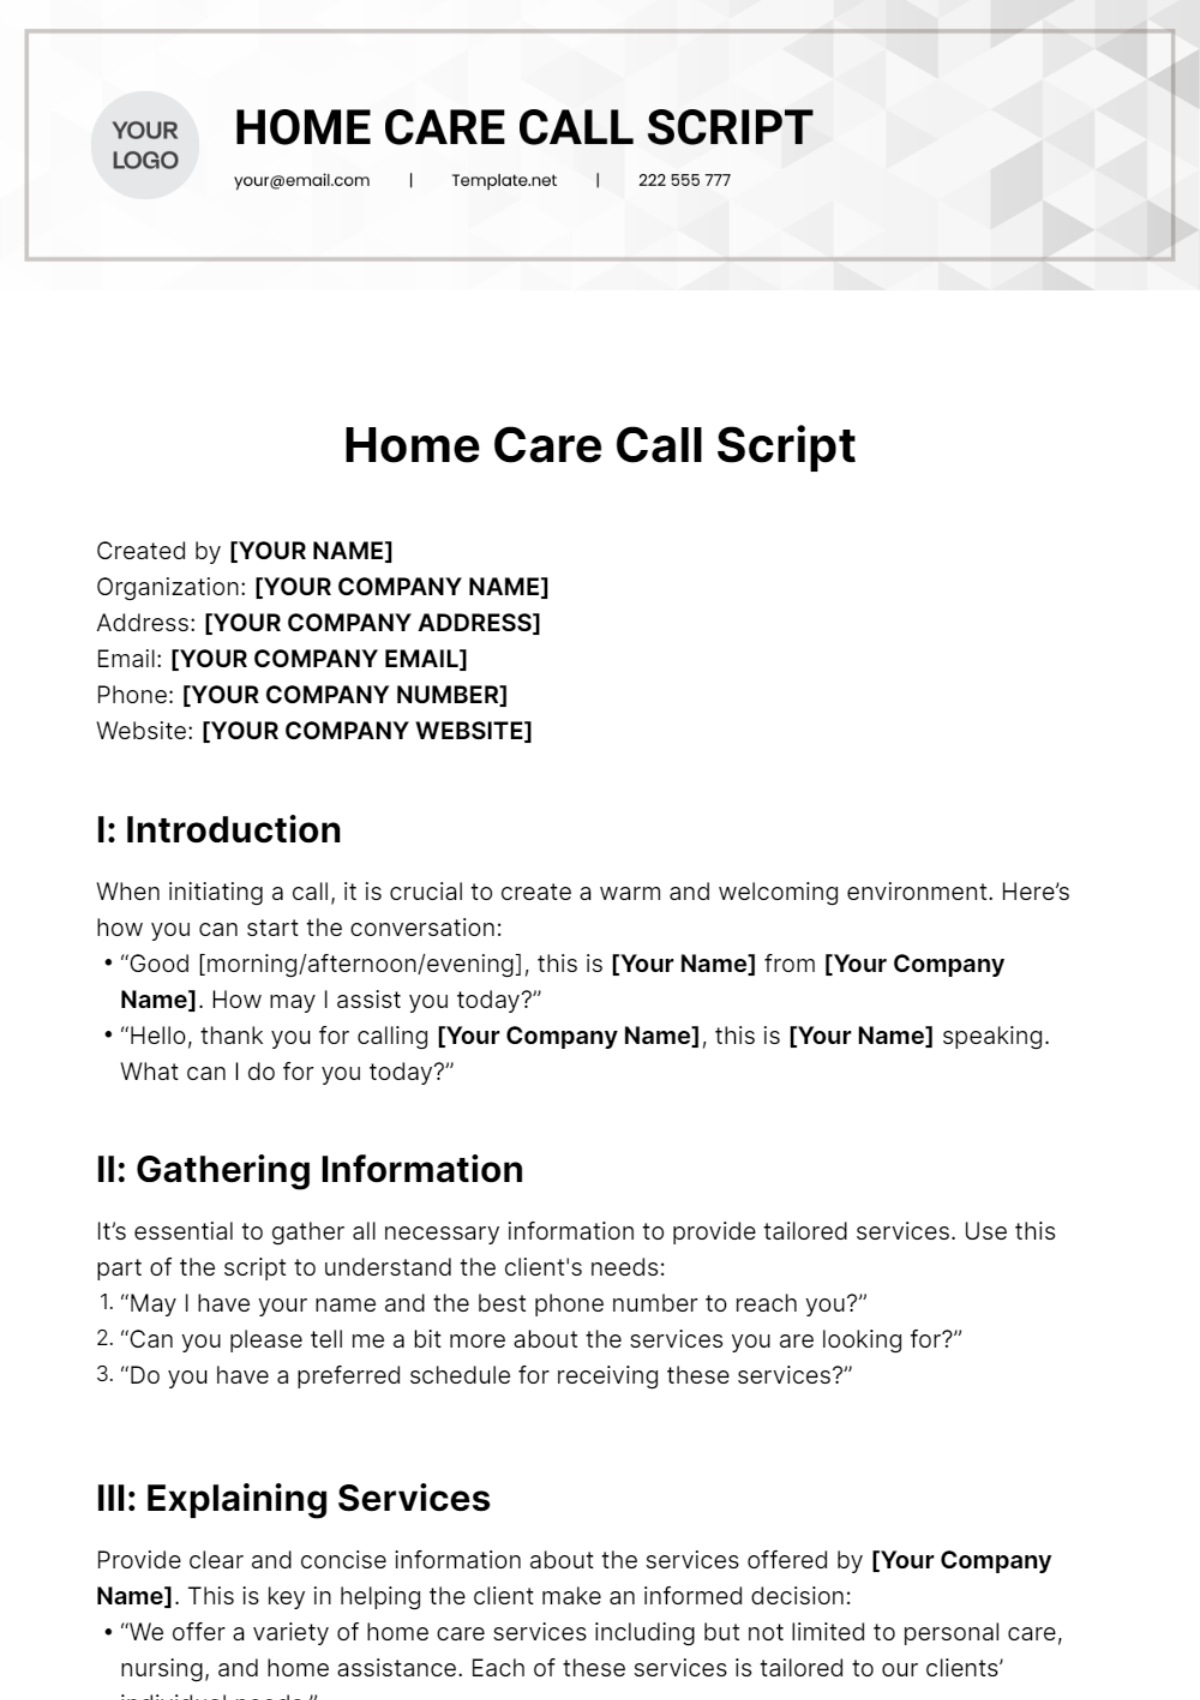 Home Care Call Script Template